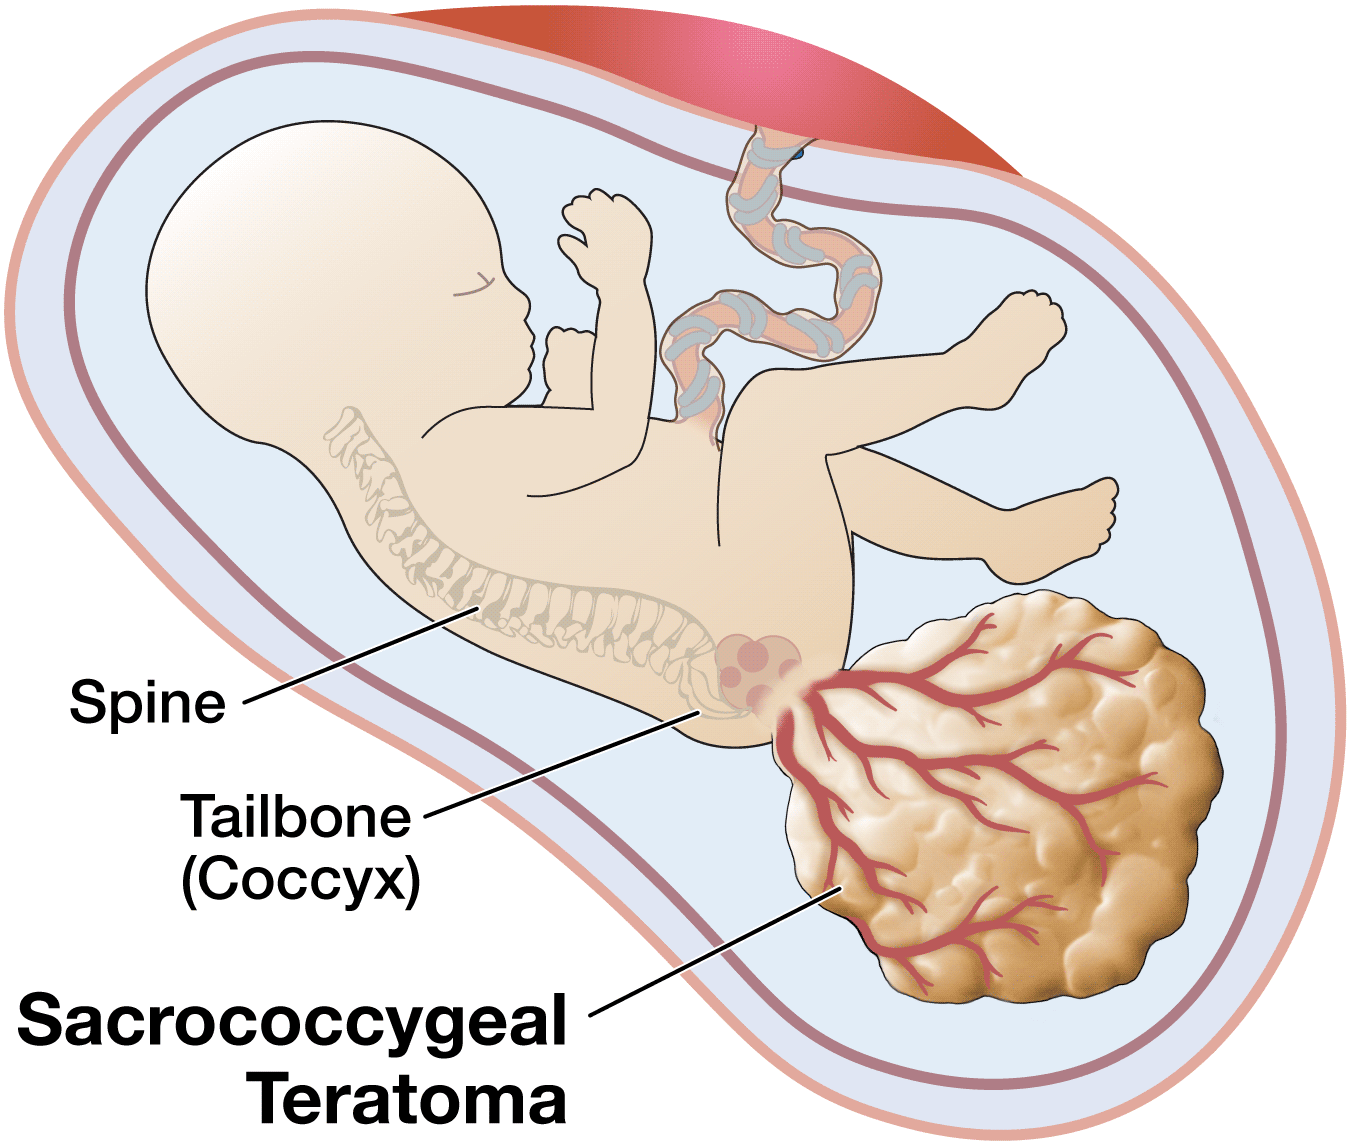 sacrococcygeal teratoma types